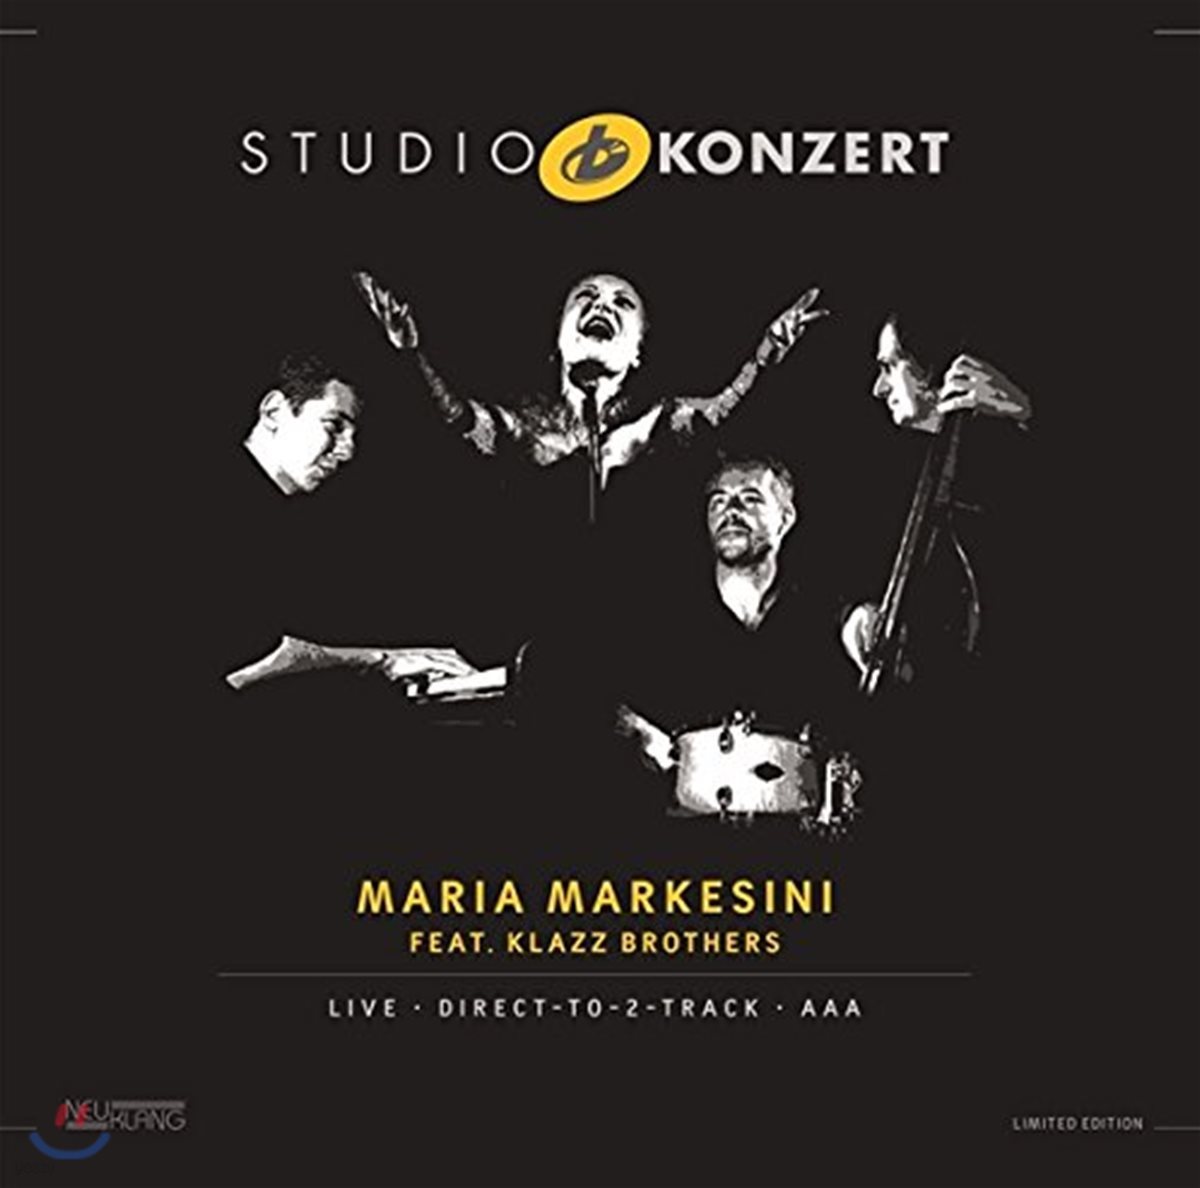 Maria Markesini &amp; Klazz Brothers - Studio Konzert 마리아 마르케시니 &amp; 클라츠 브라더스 스튜디오 콘서트 [Limited Edition LP]